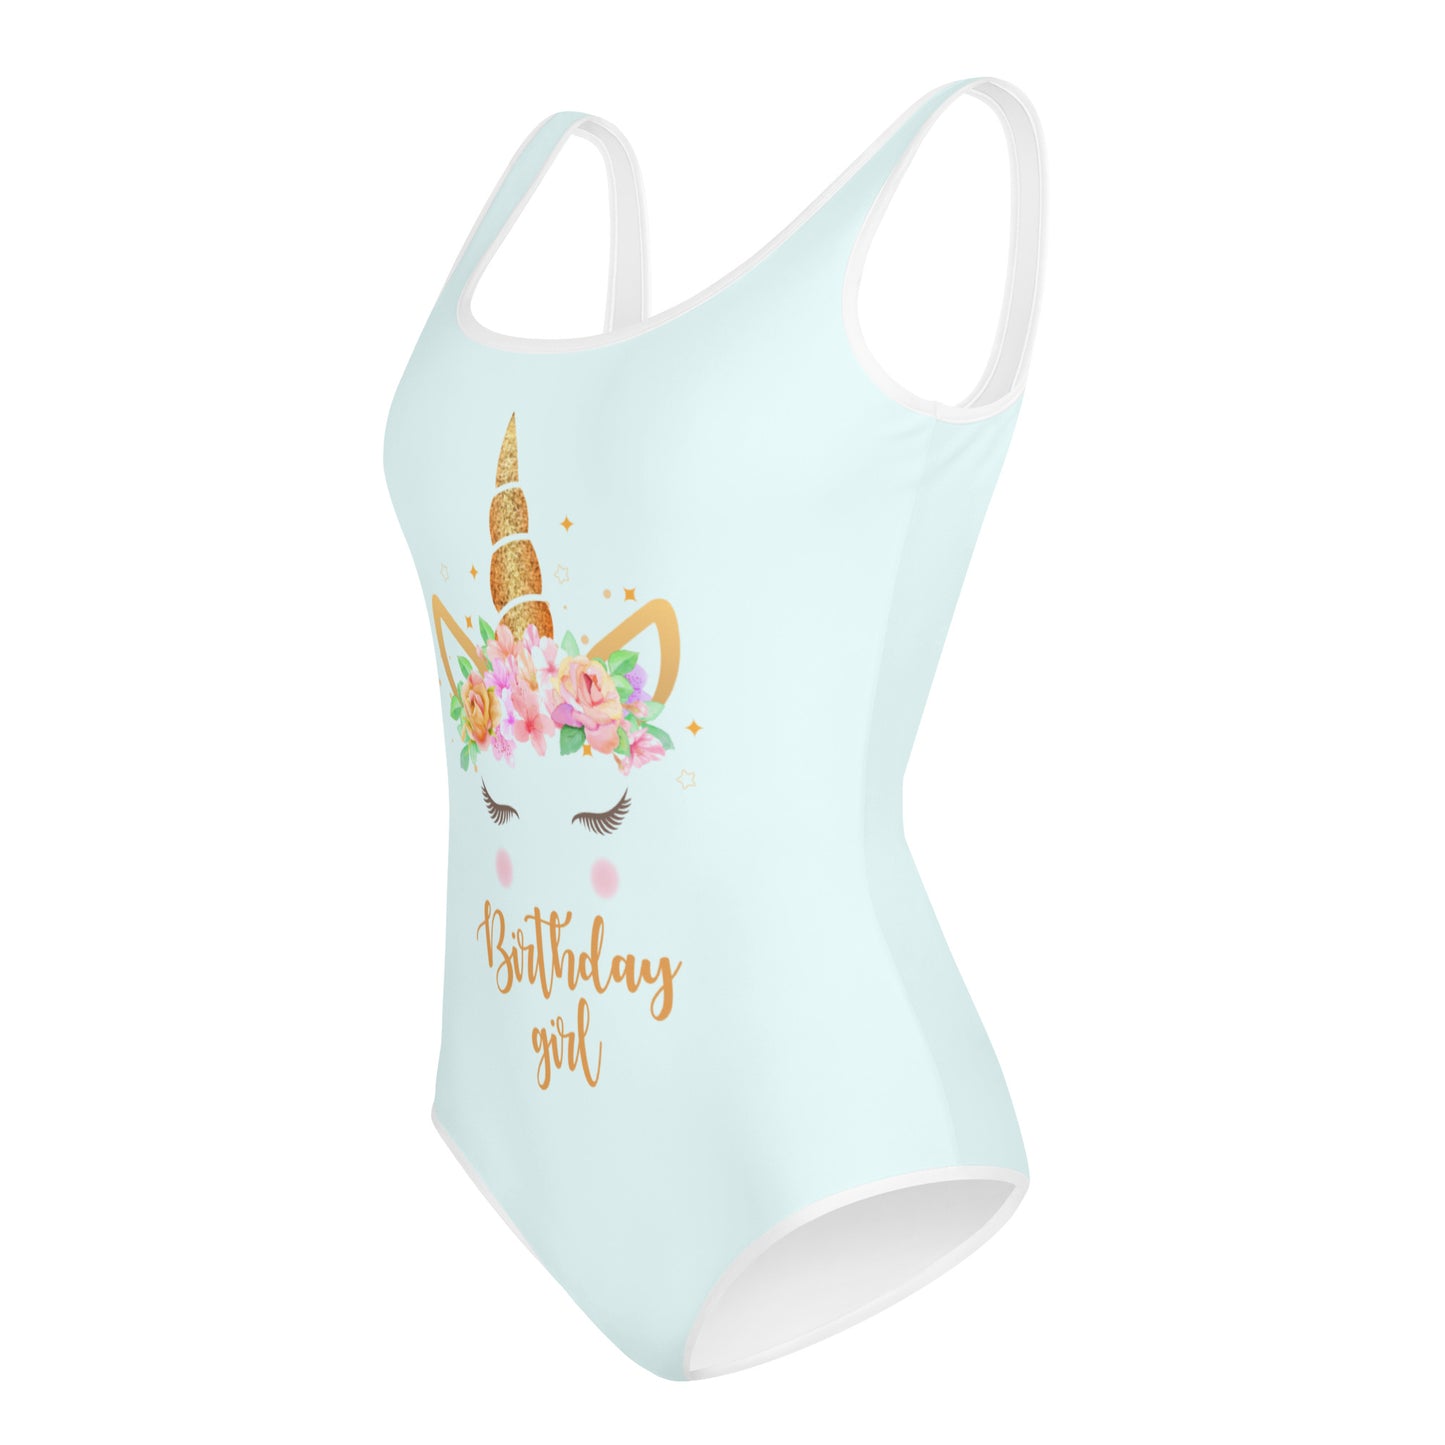 Birthday Girls Unicorn Swimsuit, Kids Bathing Suit One Piece Flowers Rainbow Swimwear Cute Party Swim Pool Party Cute Custom Name Gift